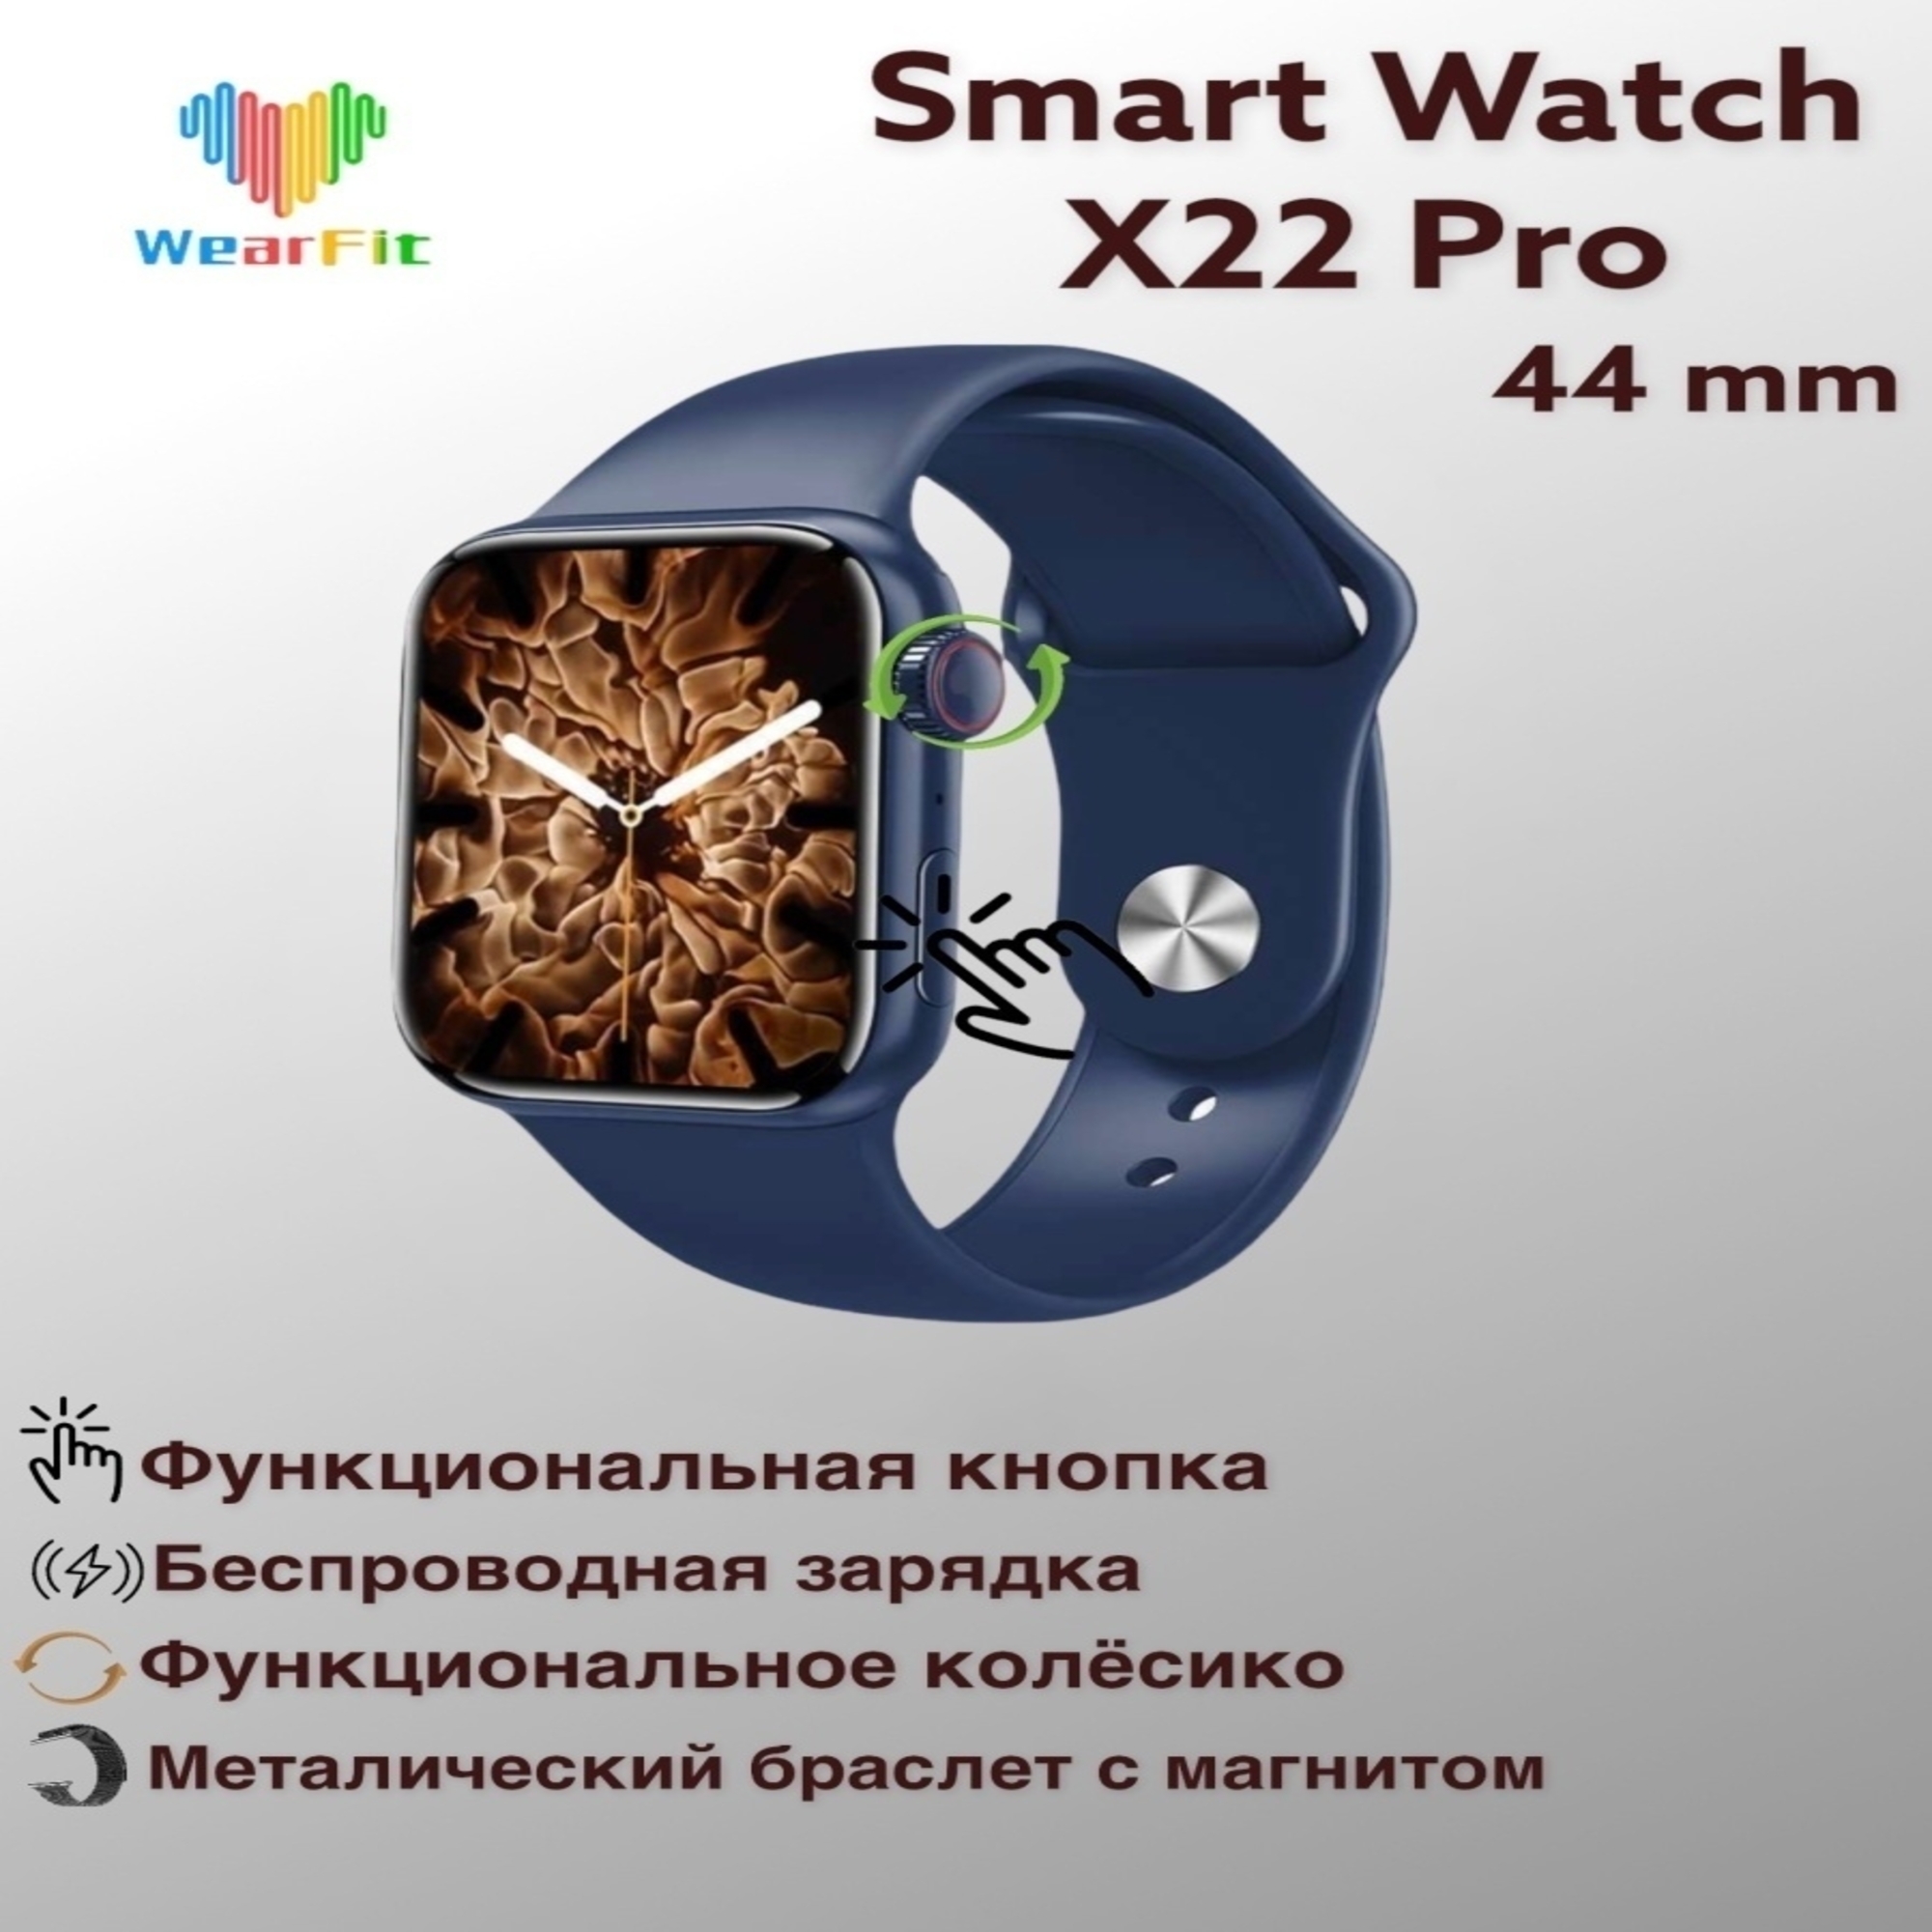 X22 pro часы. Смарт часы x22 Pro. Часы x22 Pro NFC. Умные часы смарт вотч x22 про. Х 22 Pro (44 mm) смарт часы.